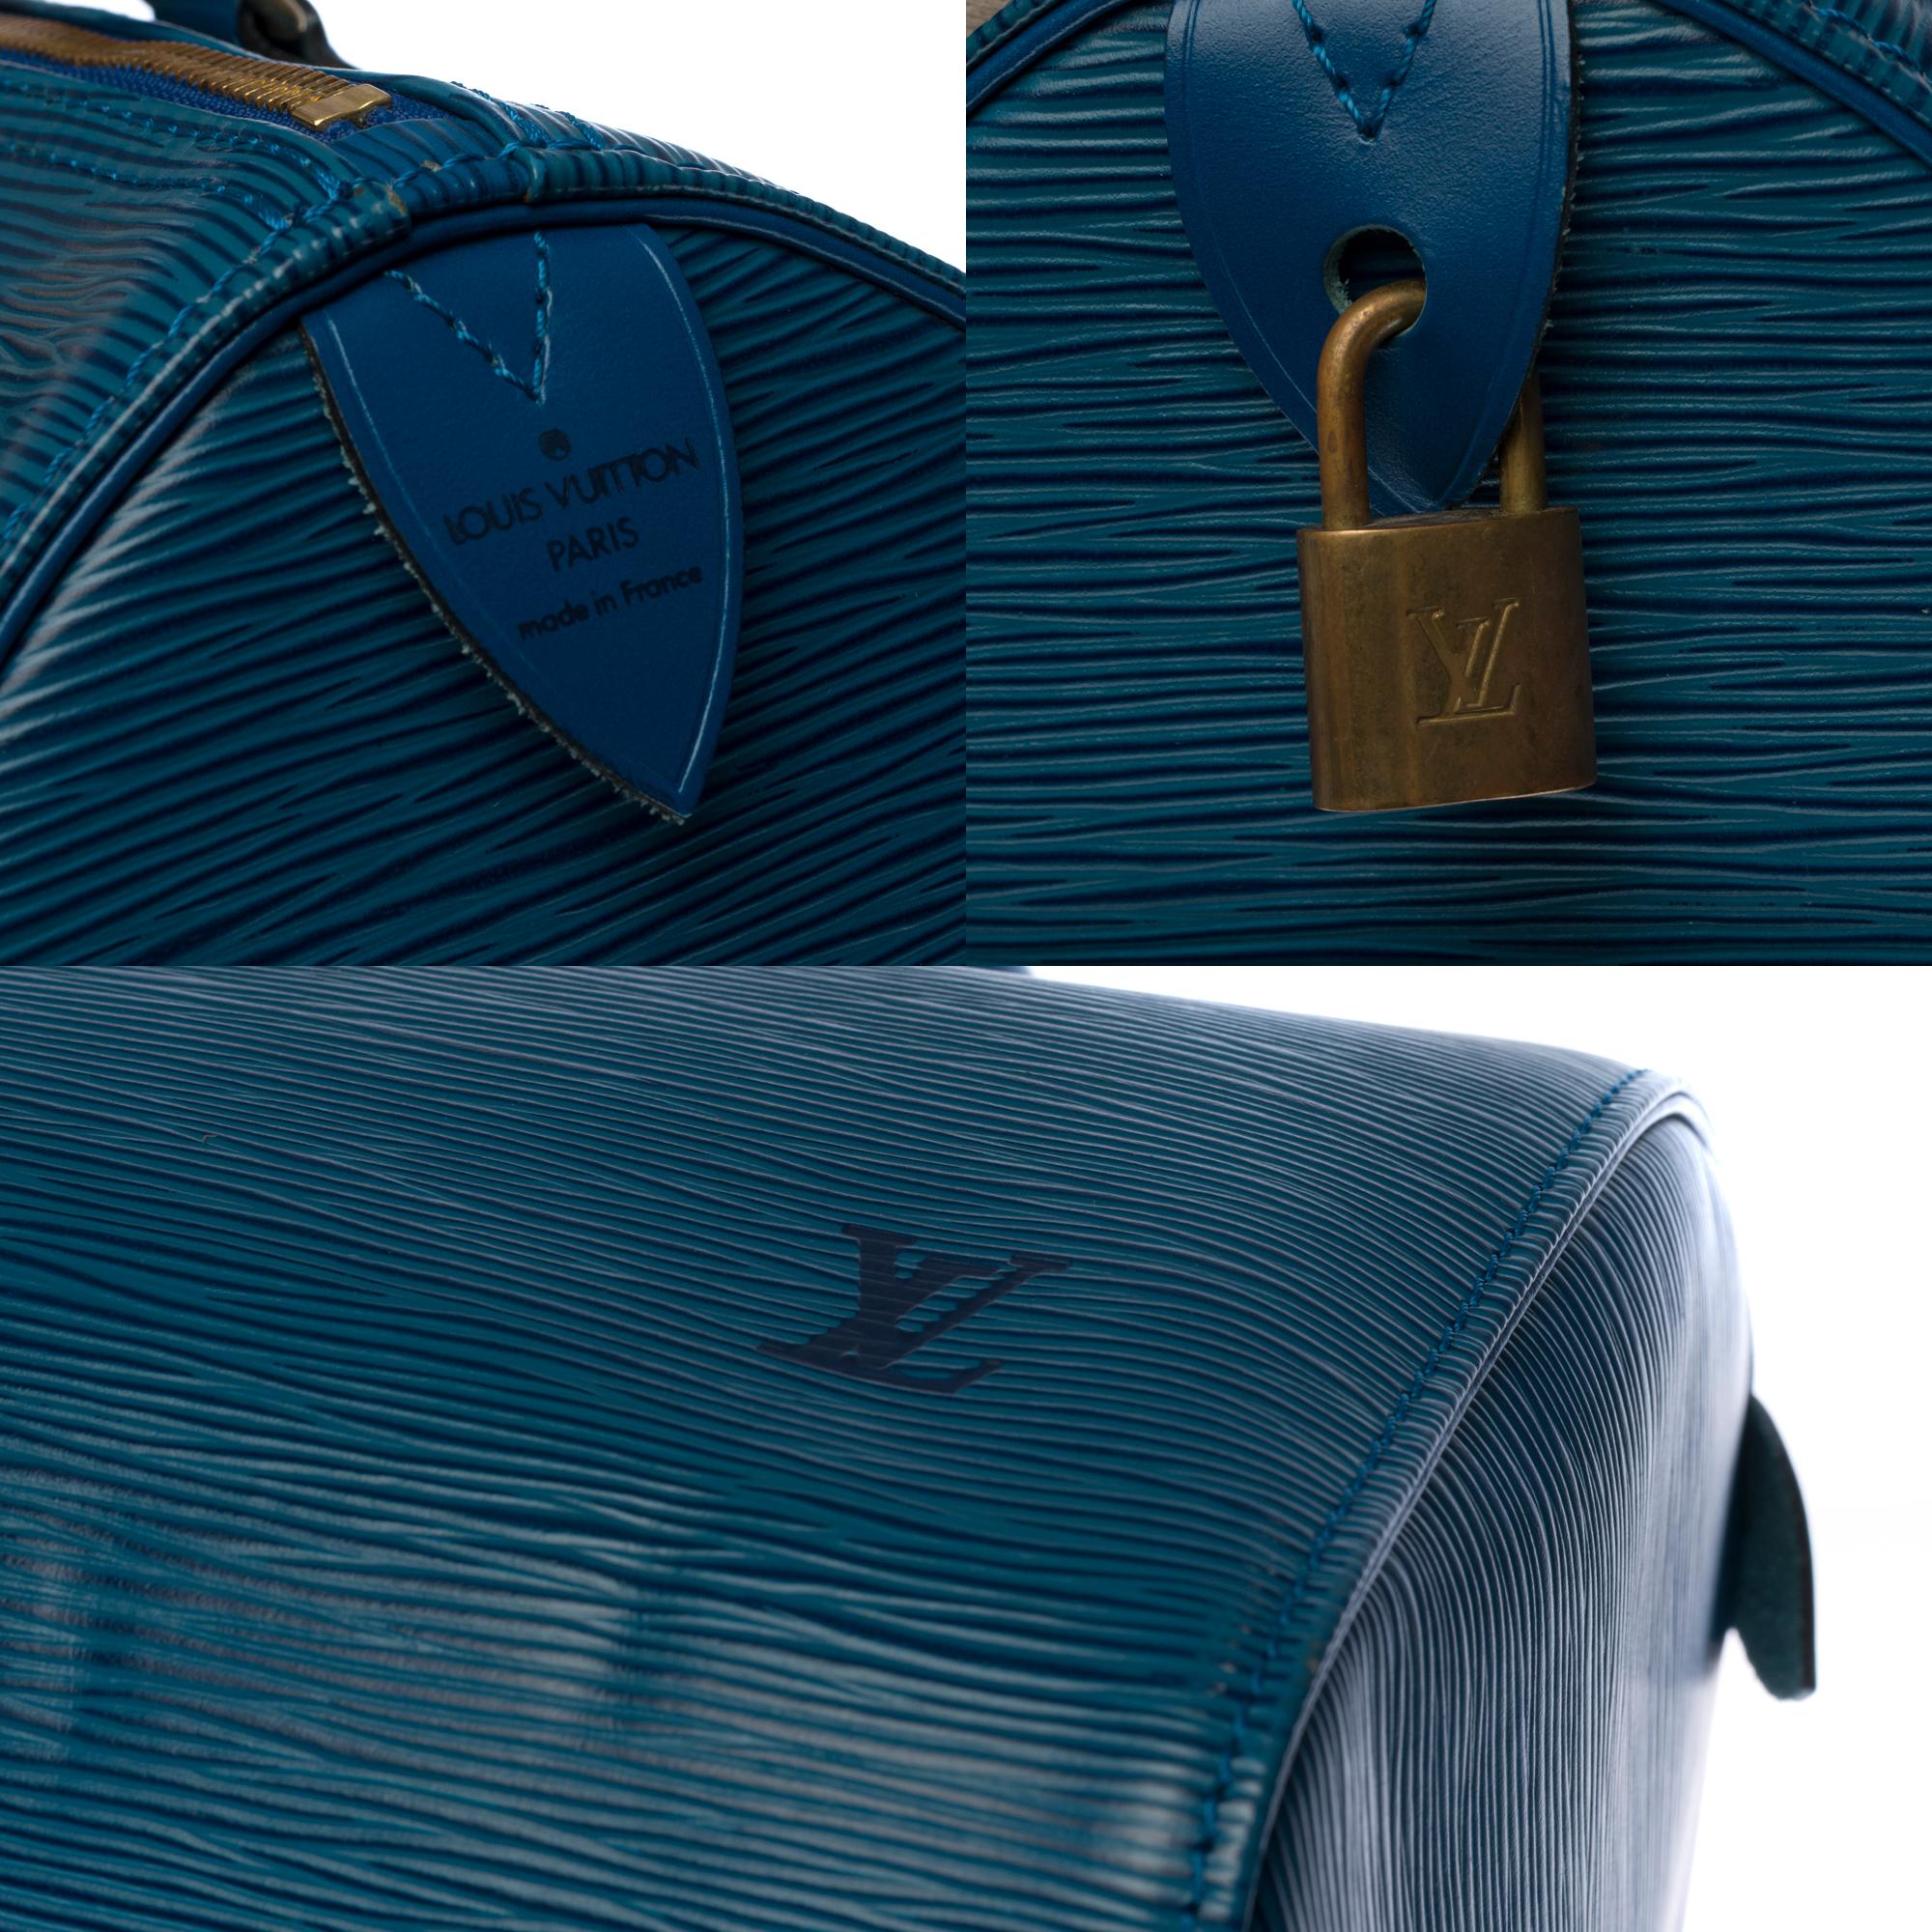 Women's or Men's Louis Vuitton Speedy 30 handbag in blue épi leather and gold hardware